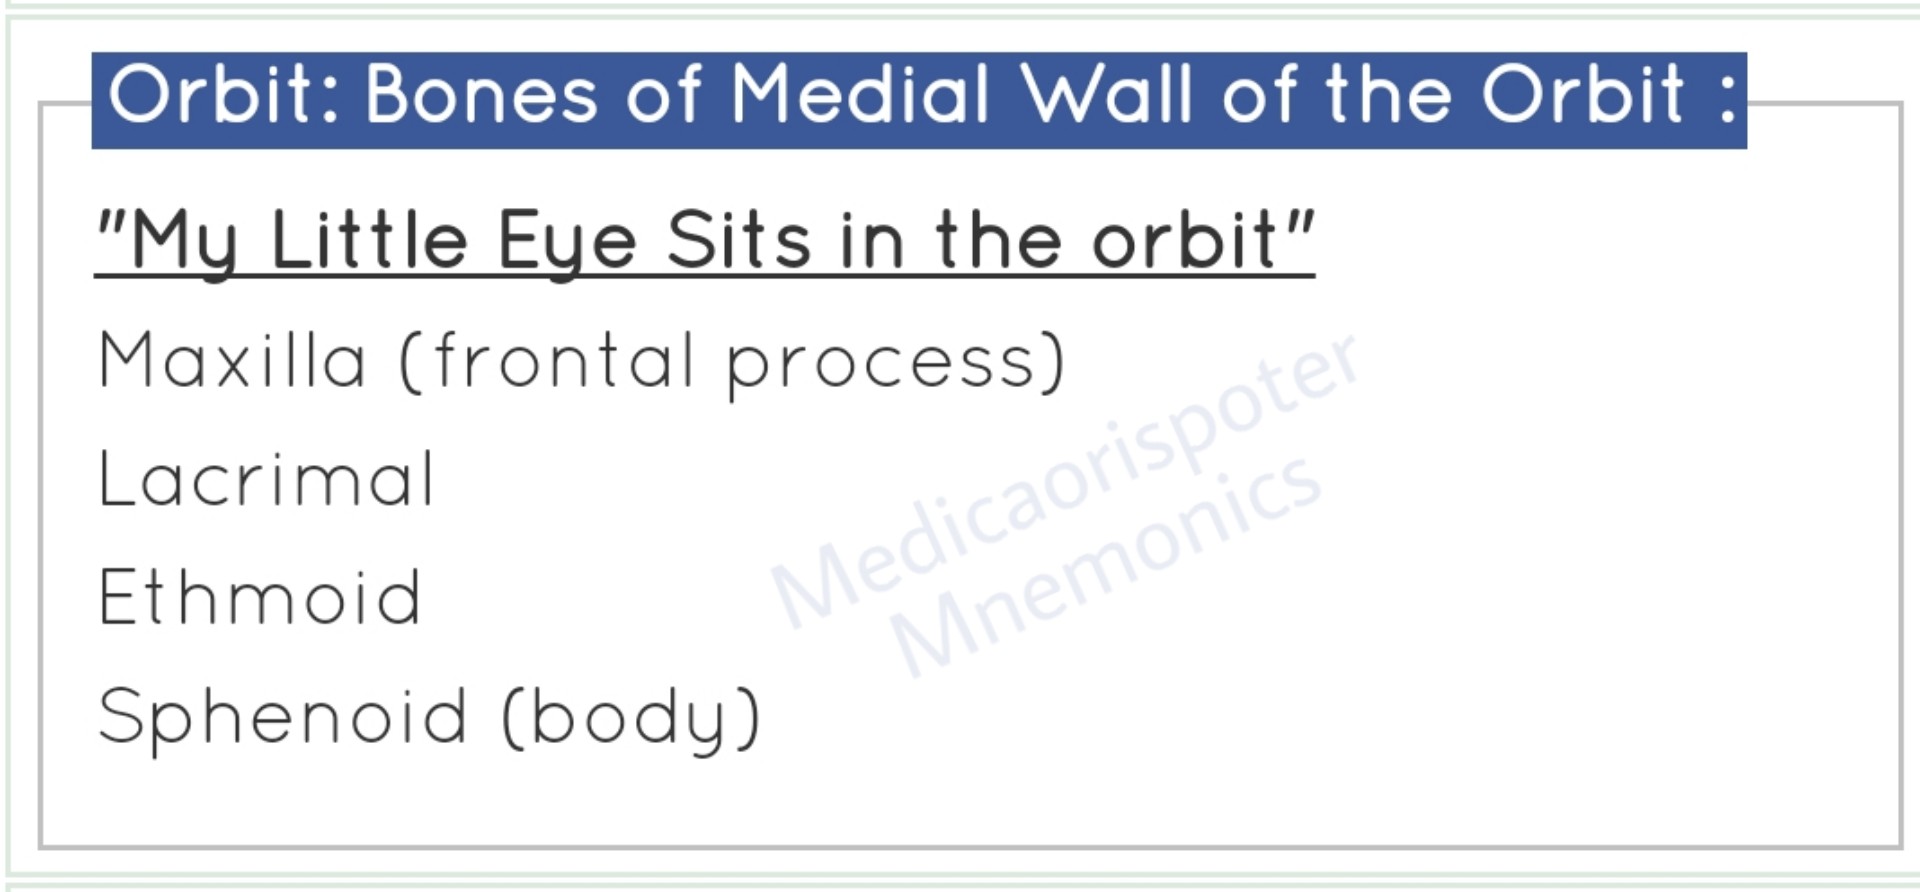 Bones_of_Medial_wall_of_Orbit